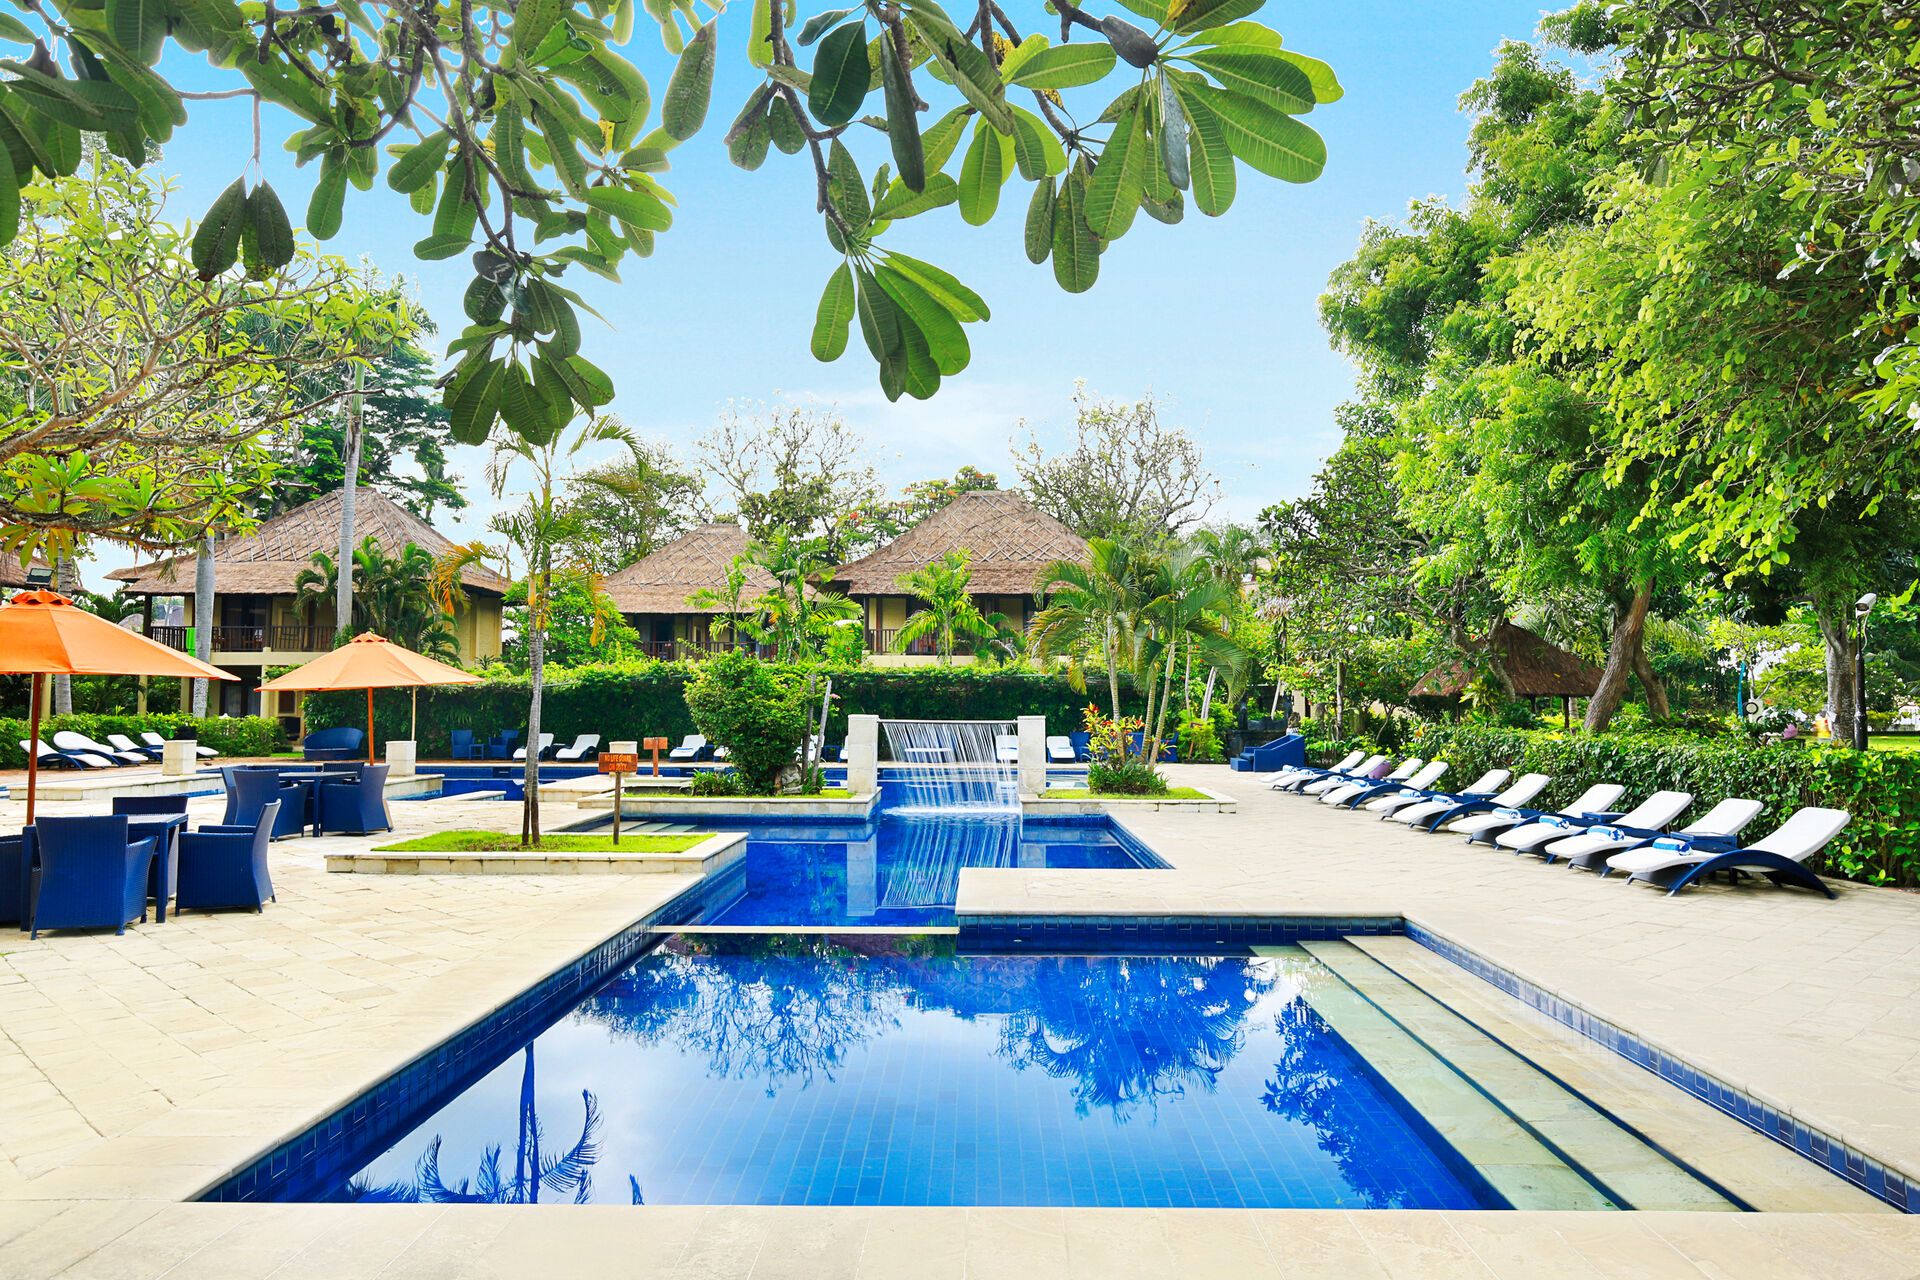 Bali - Indonésie - Hôtel Mercure Resort Sanur 3*